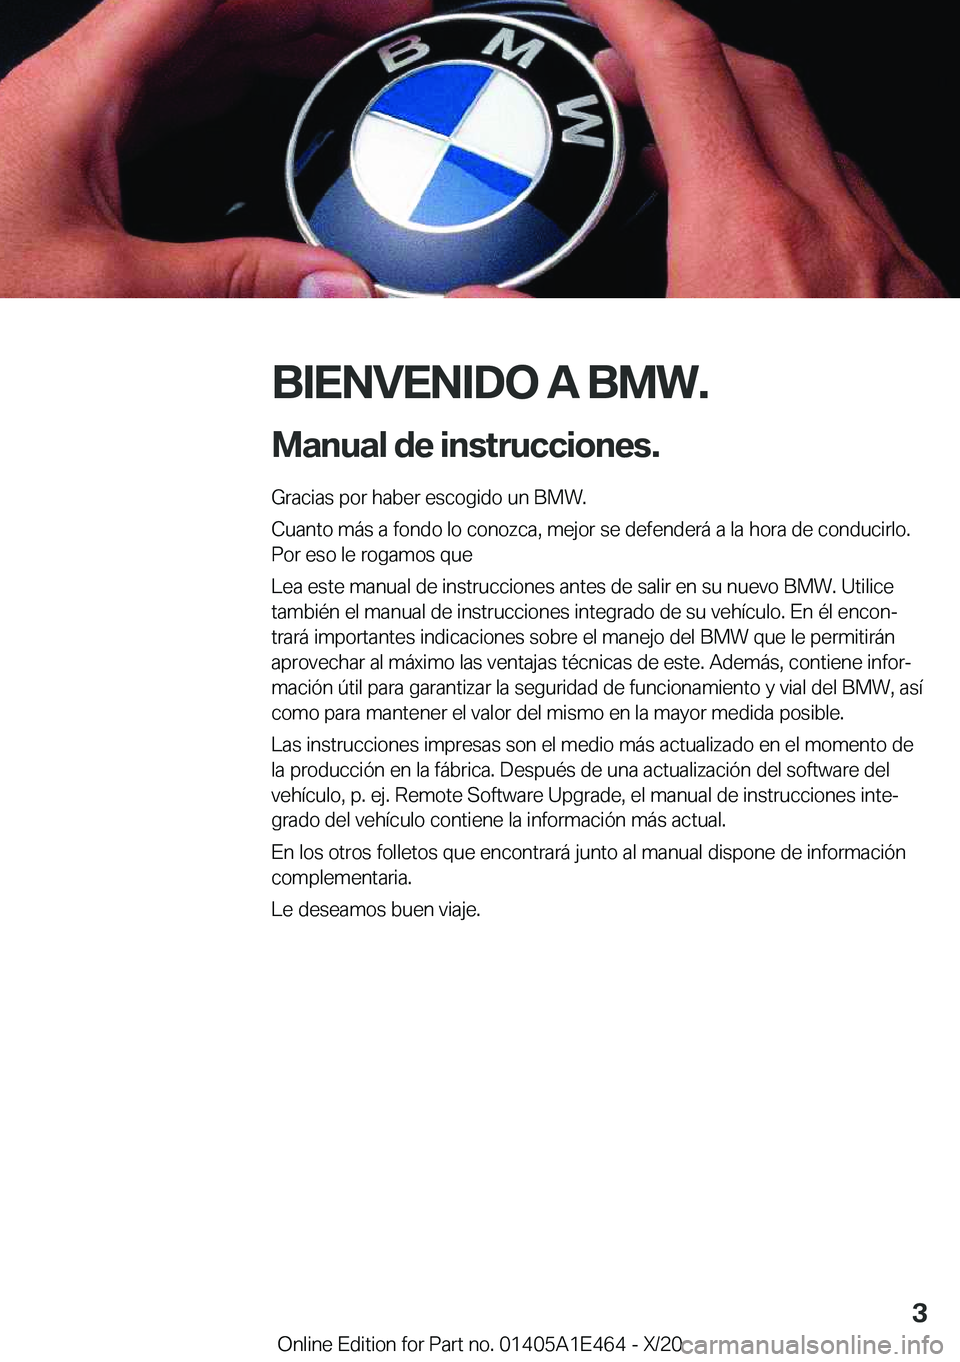 BMW M3 2021  Manuales de Empleo (in Spanish) �B�I�E�N�V�E�N�I�D�O��A��B�M�W�.
�M�a�n�u�a�l��d�e��i�n�s�t�r�u�c�c�i�o�n�e�s�. �G�r�a�c�i�a�s��p�o�r��h�a�b�e�r��e�s�c�o�g�i�d�o��u�n��B�M�W�.
�C�u�a�n�t�o��m�